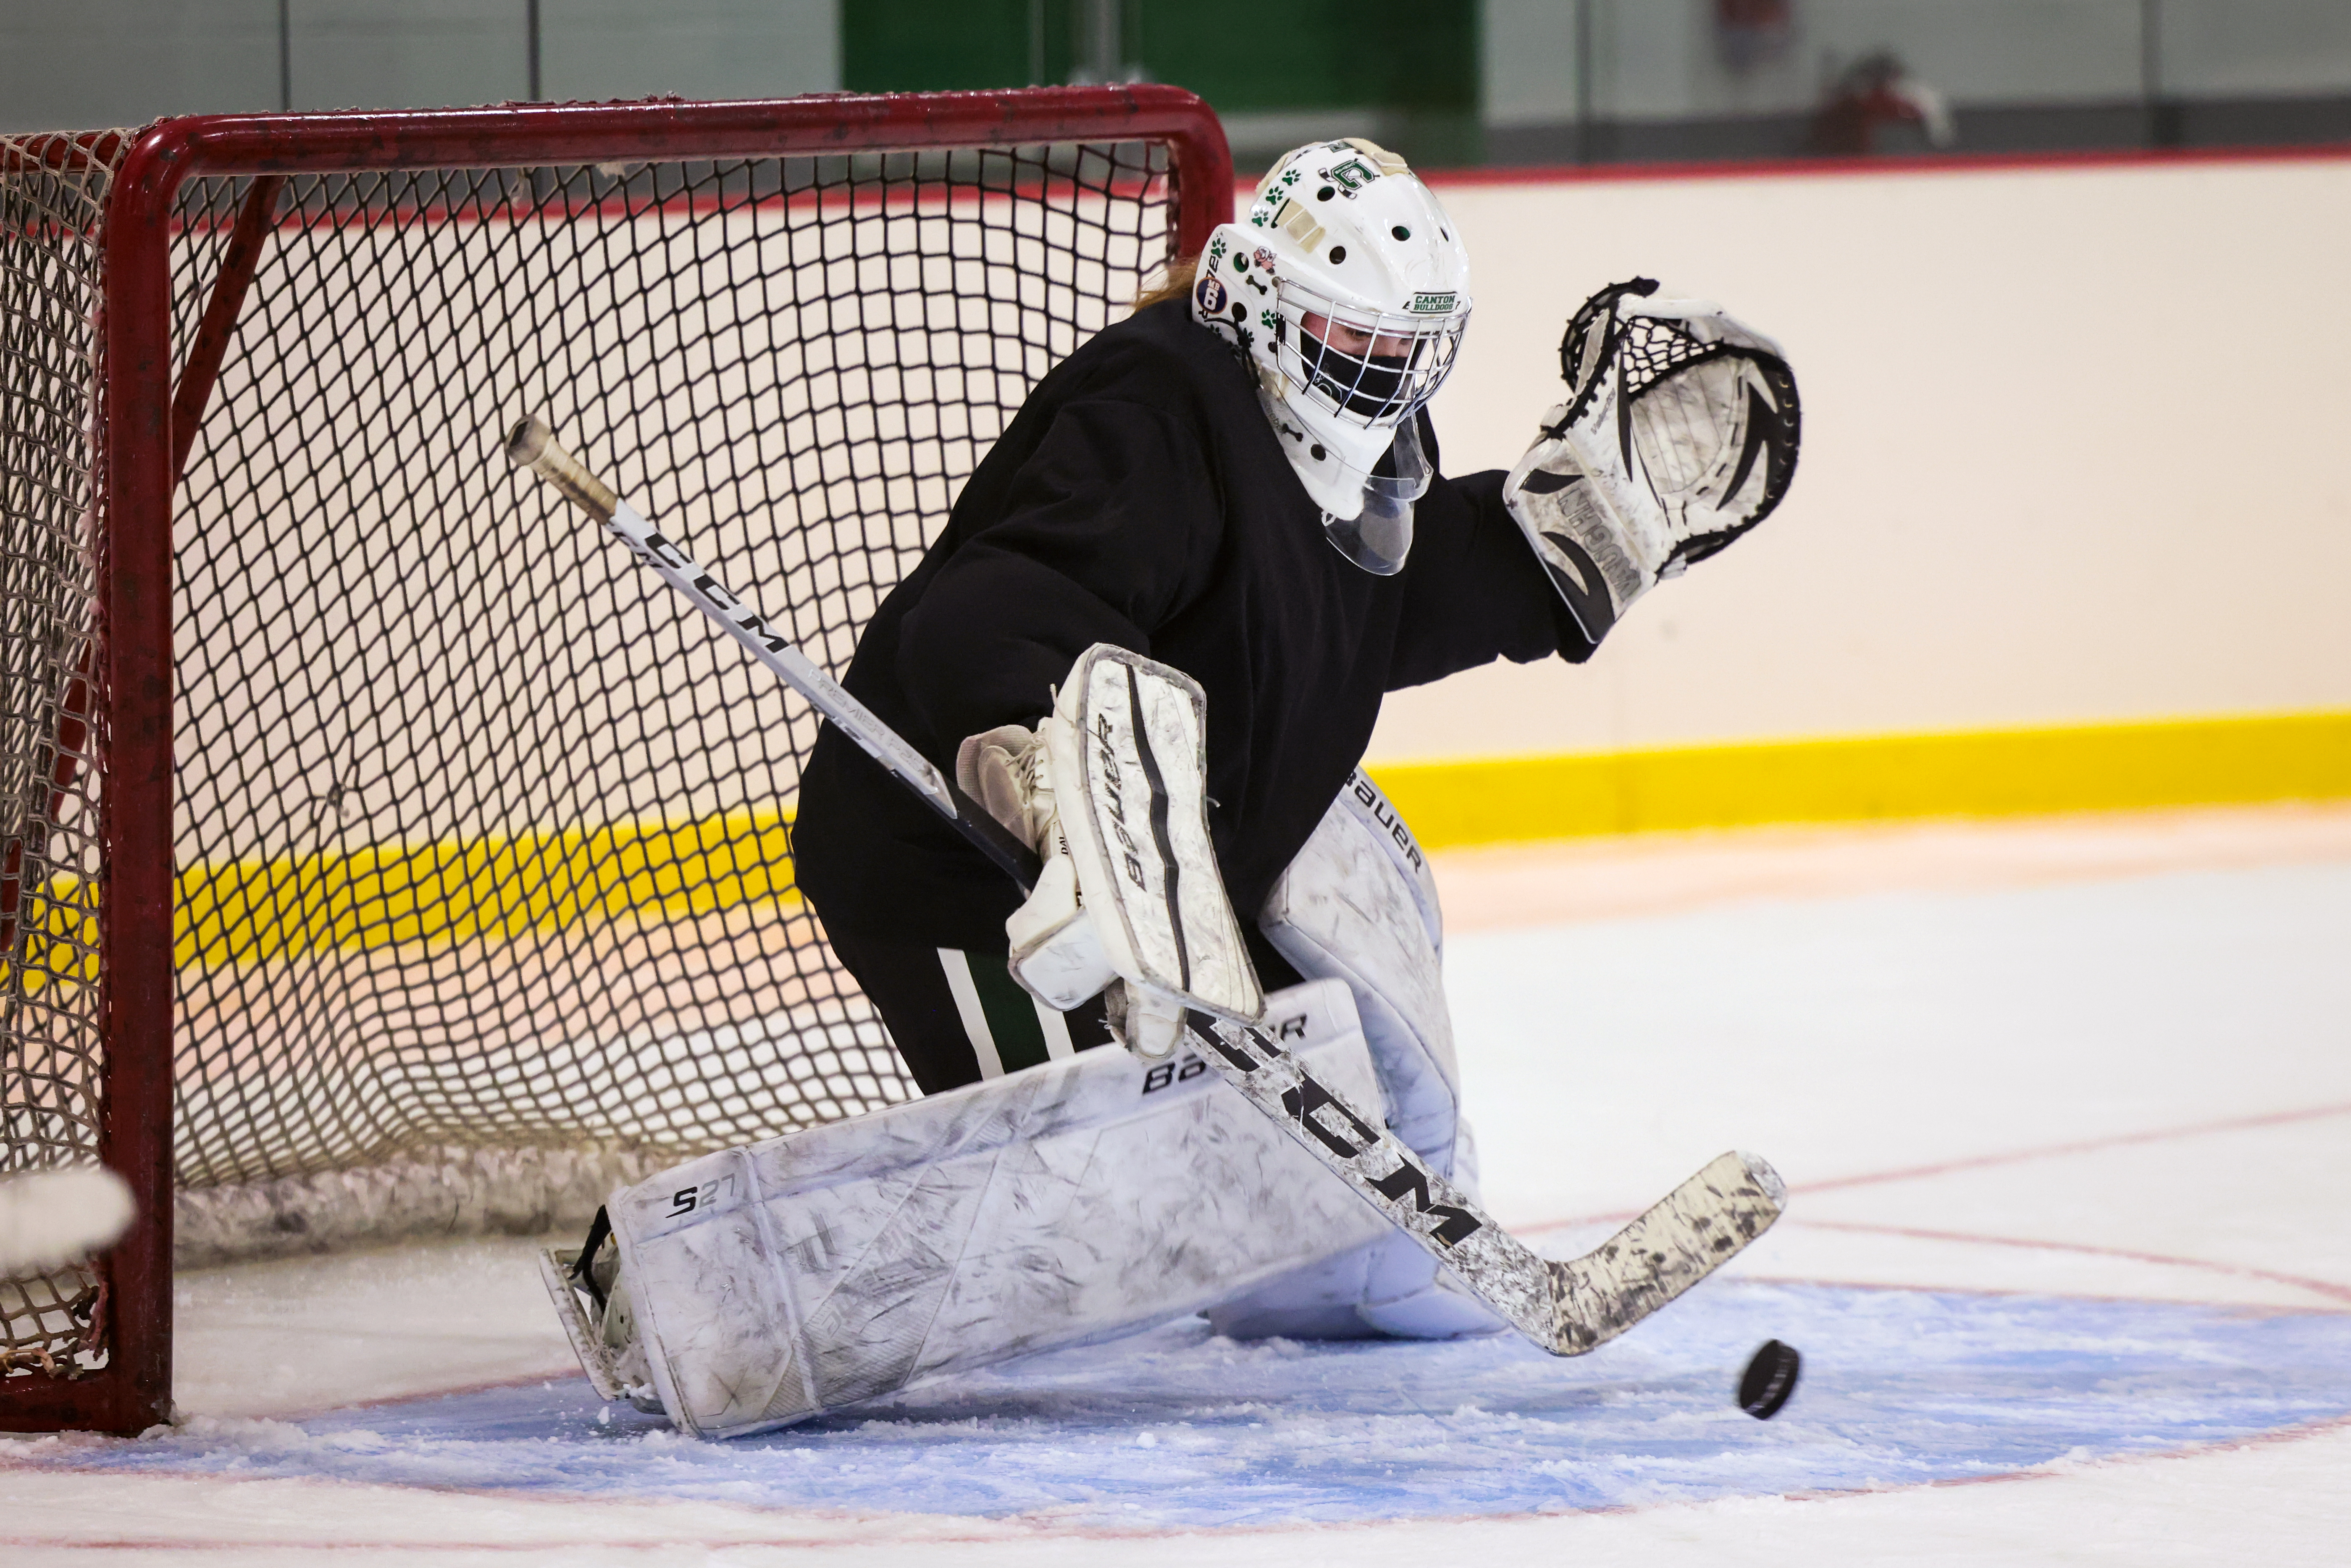 Massachusetts high school hockey goalie excels on ice despite being legally  blind - CBS Boston